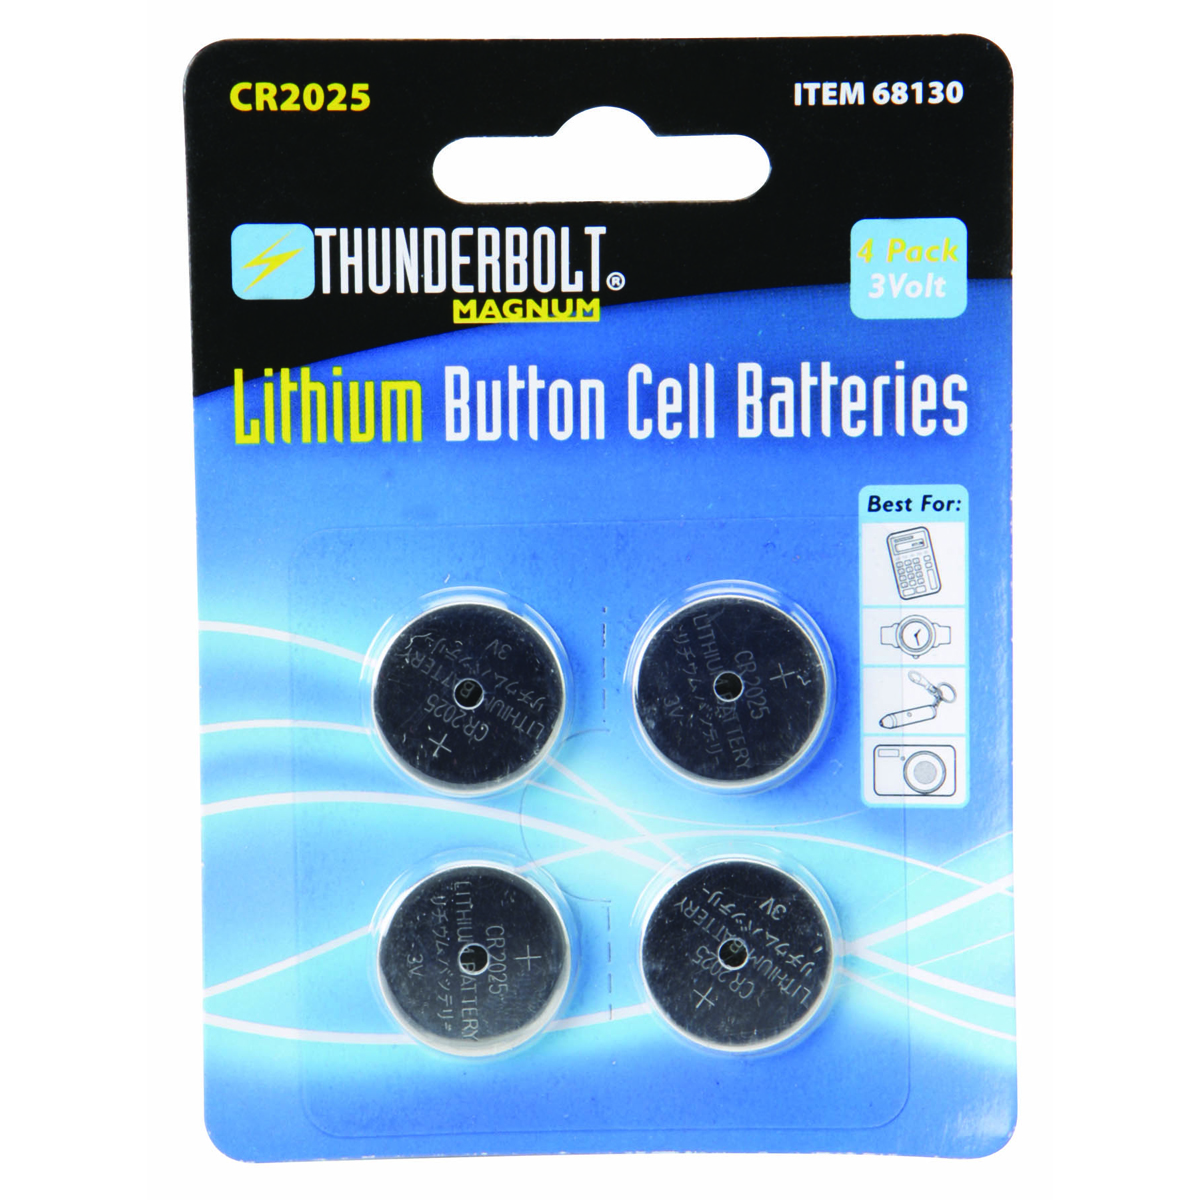 THUNDERBOLT CR2025 Lithium Button Cell Batteries 4 Pk. - Item 68130